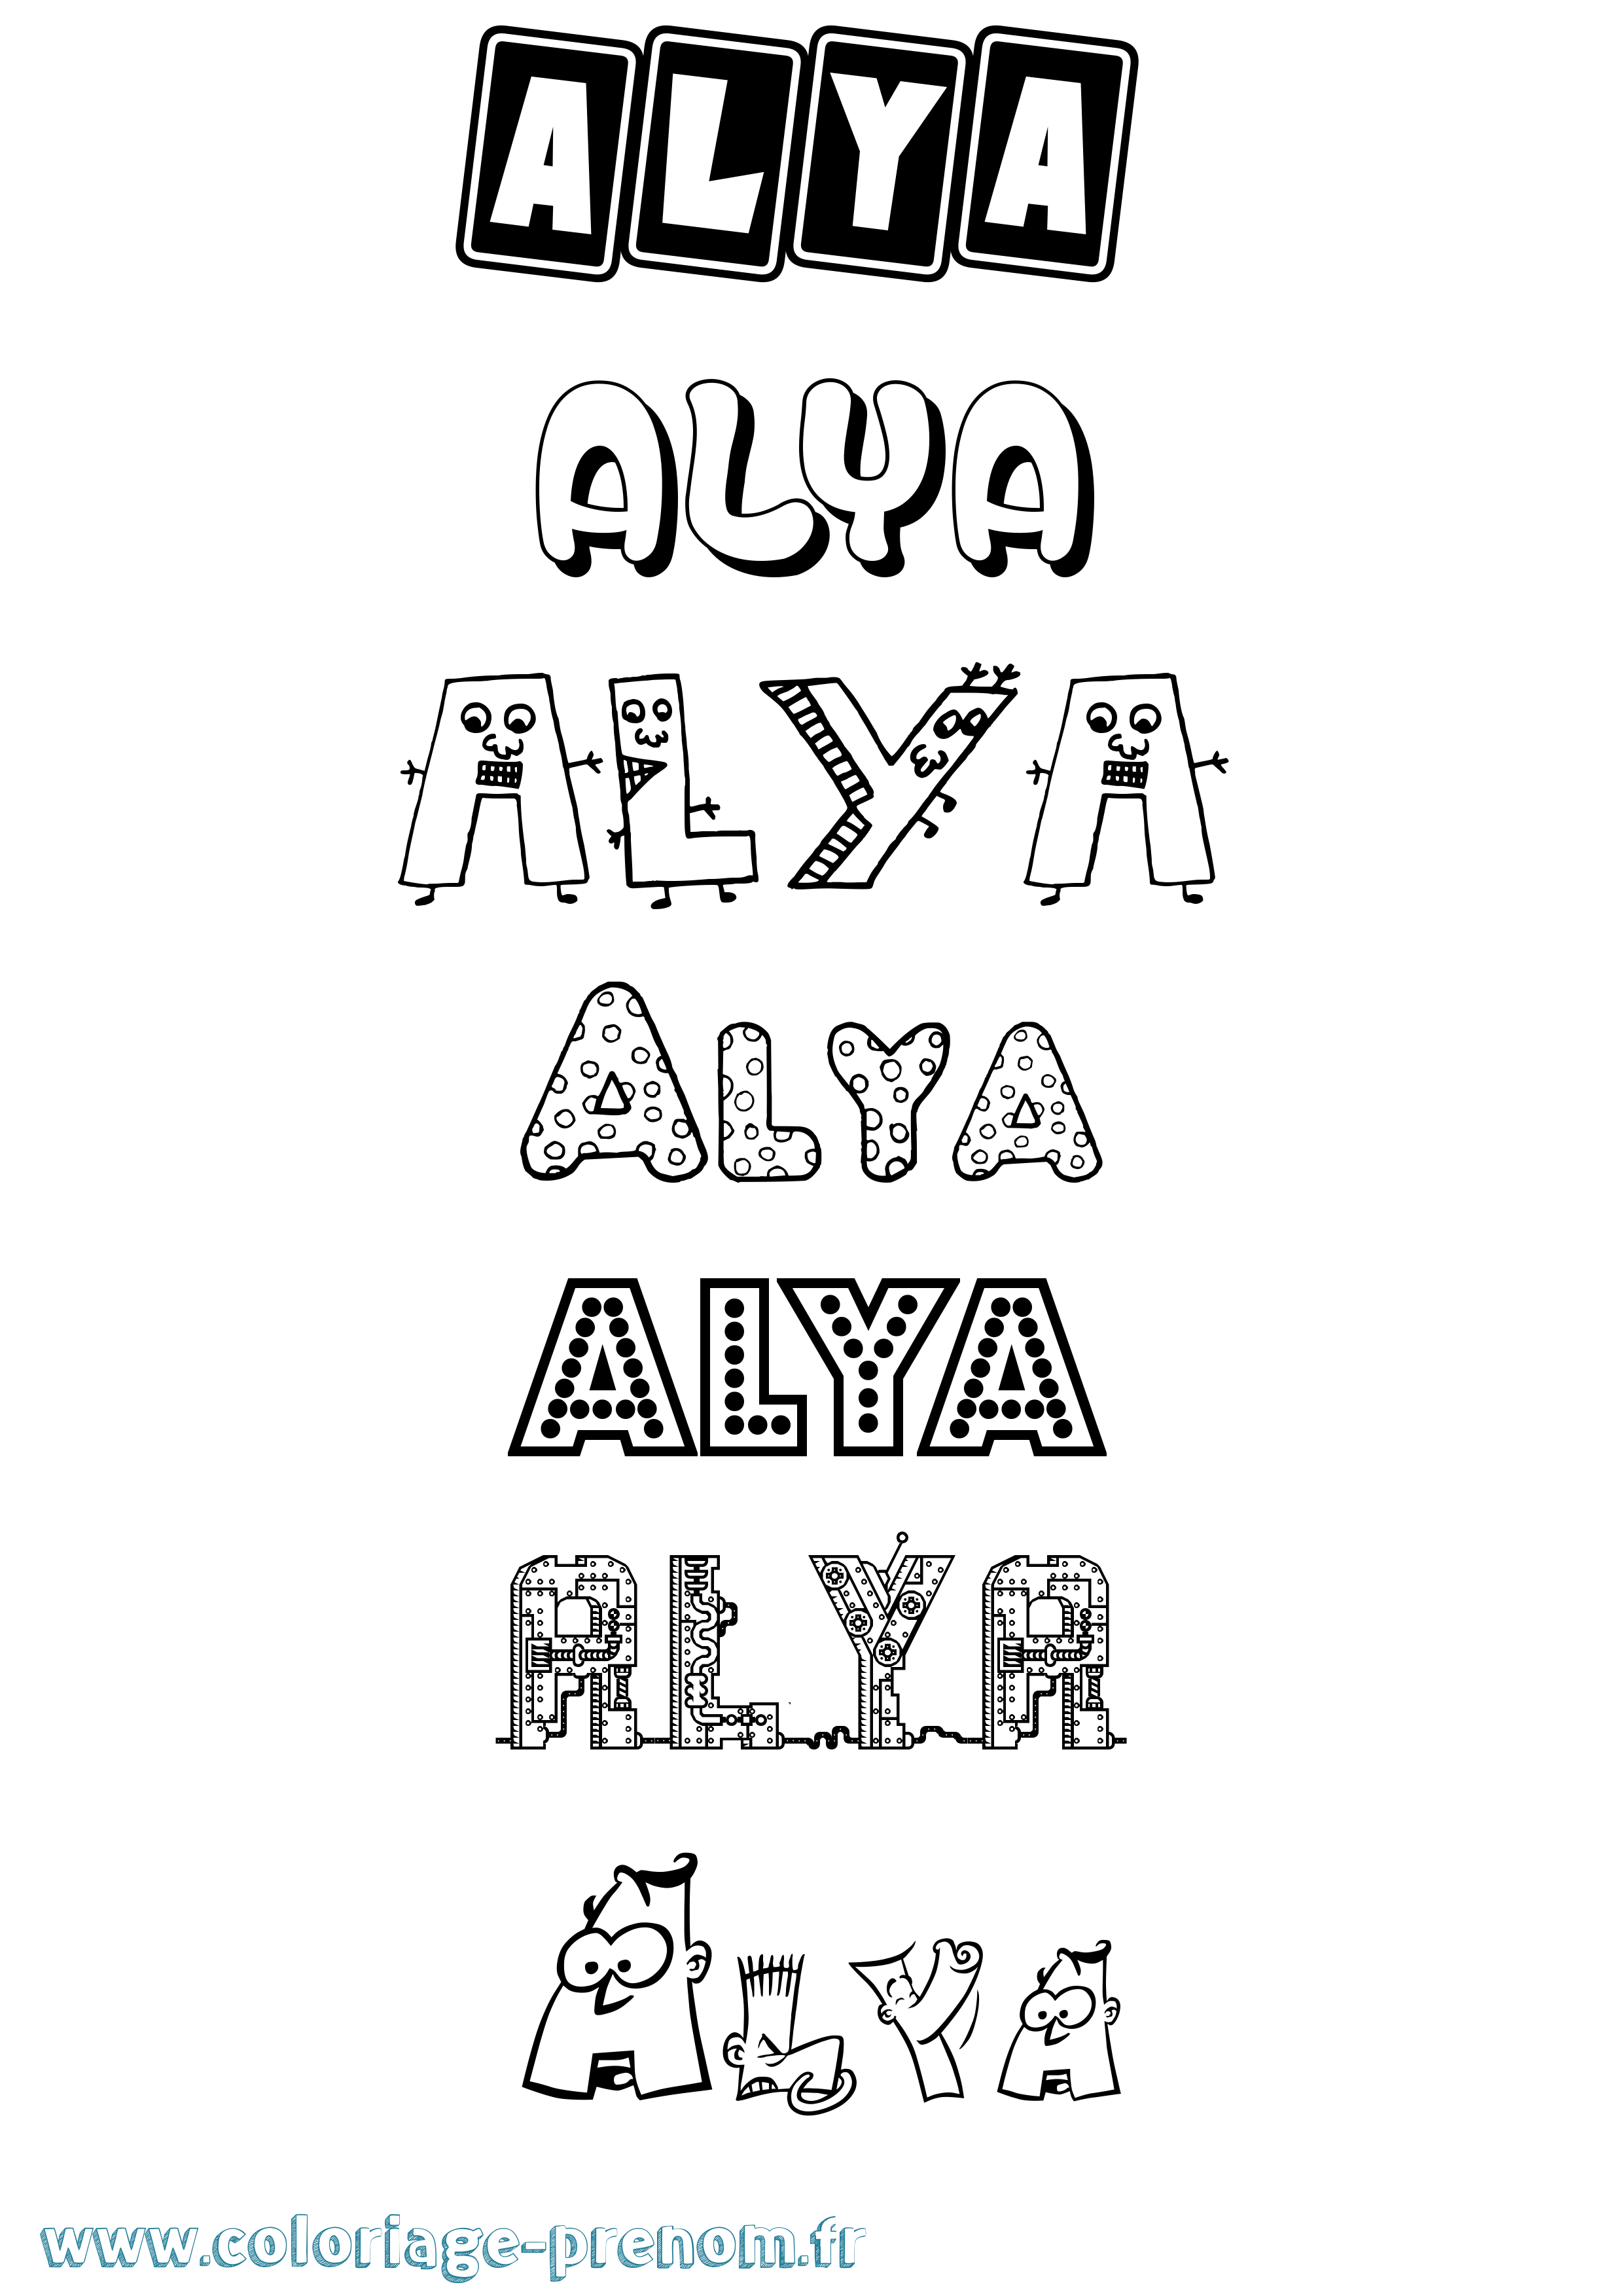 Coloriage prénom Alya